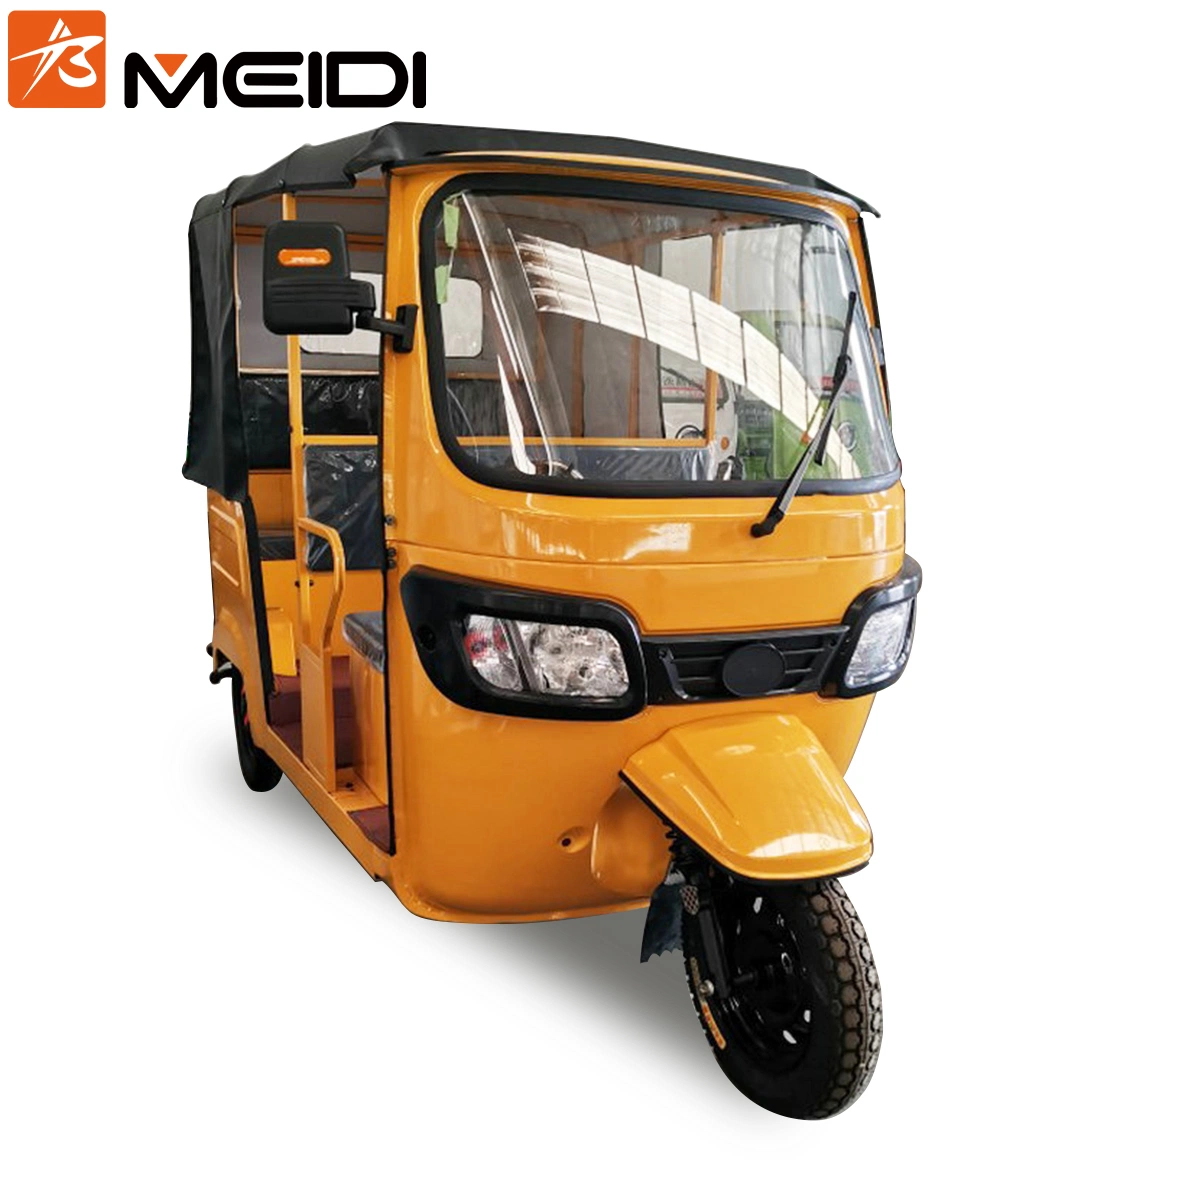 Meidi Xuzhou Factory Three-Wheel Electric Tricycle Battery Operated Auto Rickshaw